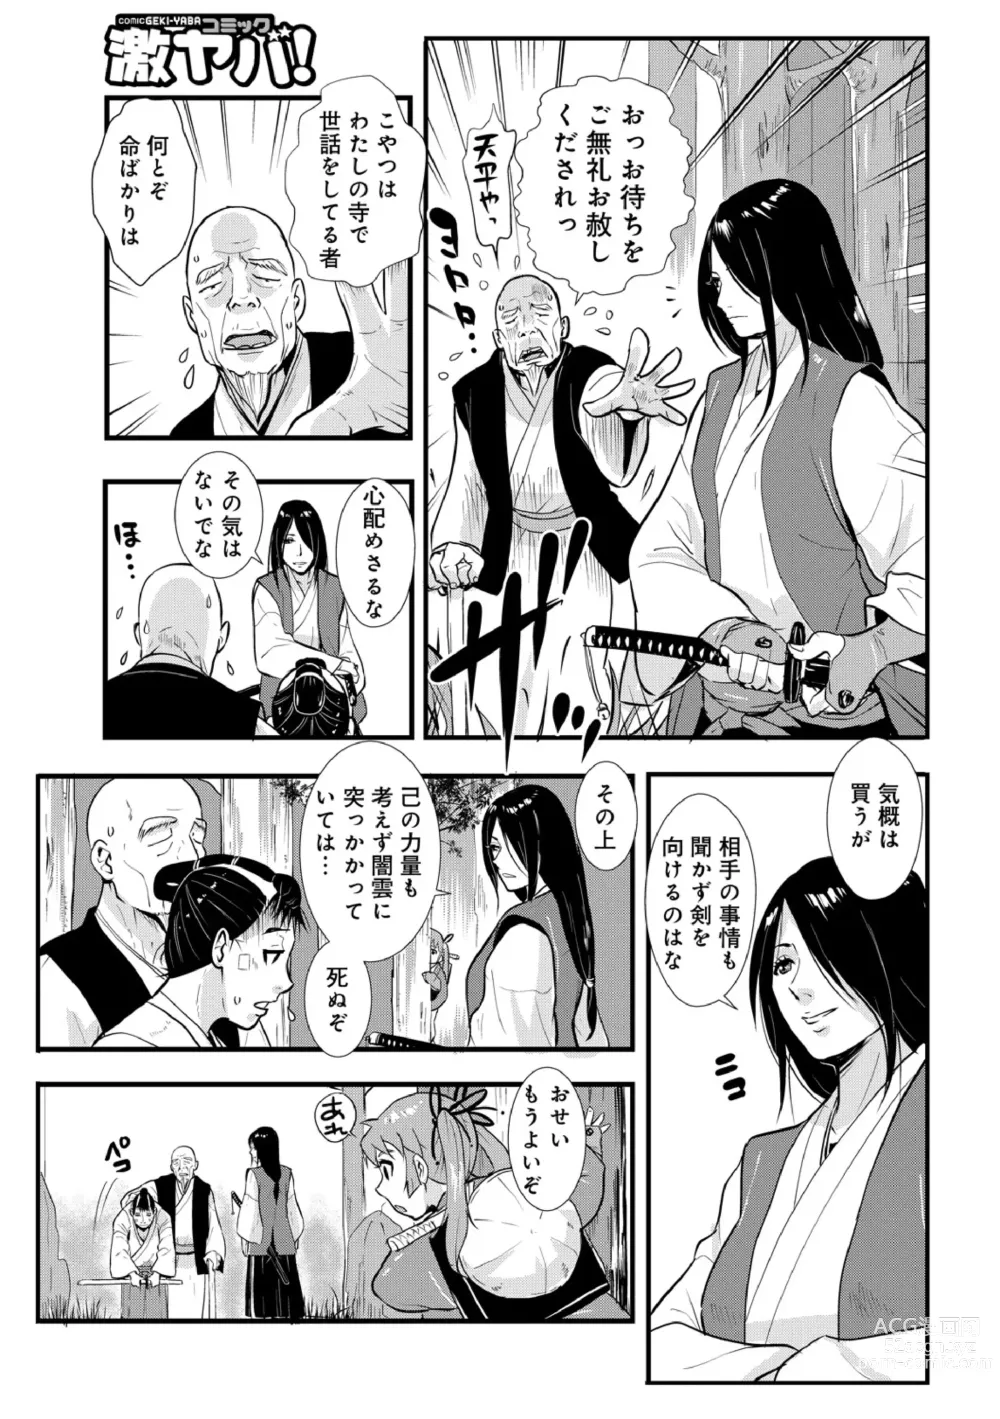 Page 5 of manga Harami samurai 05 ~Onsen no Tera to Joukou no Omoi~